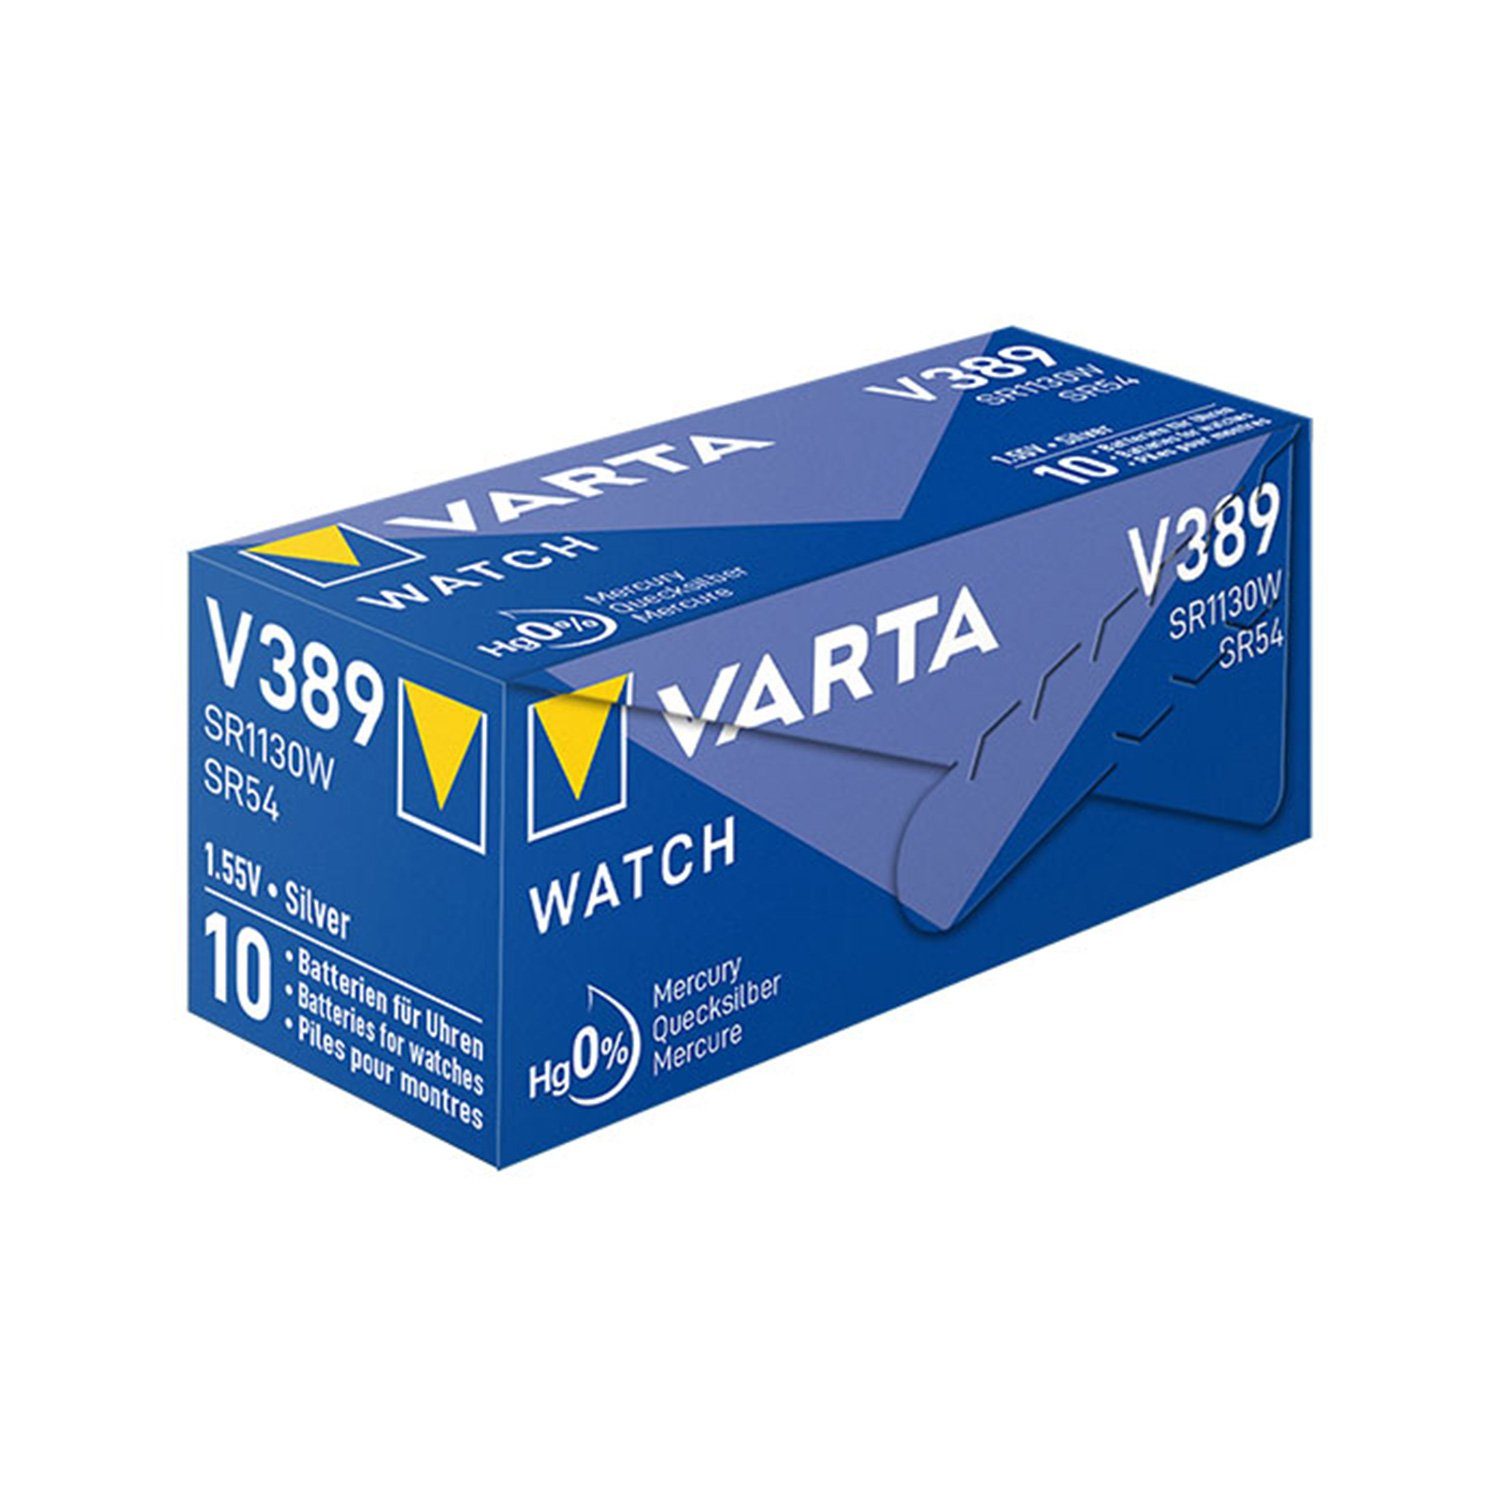 VARTA Batterie Varta Knopfzelle 389